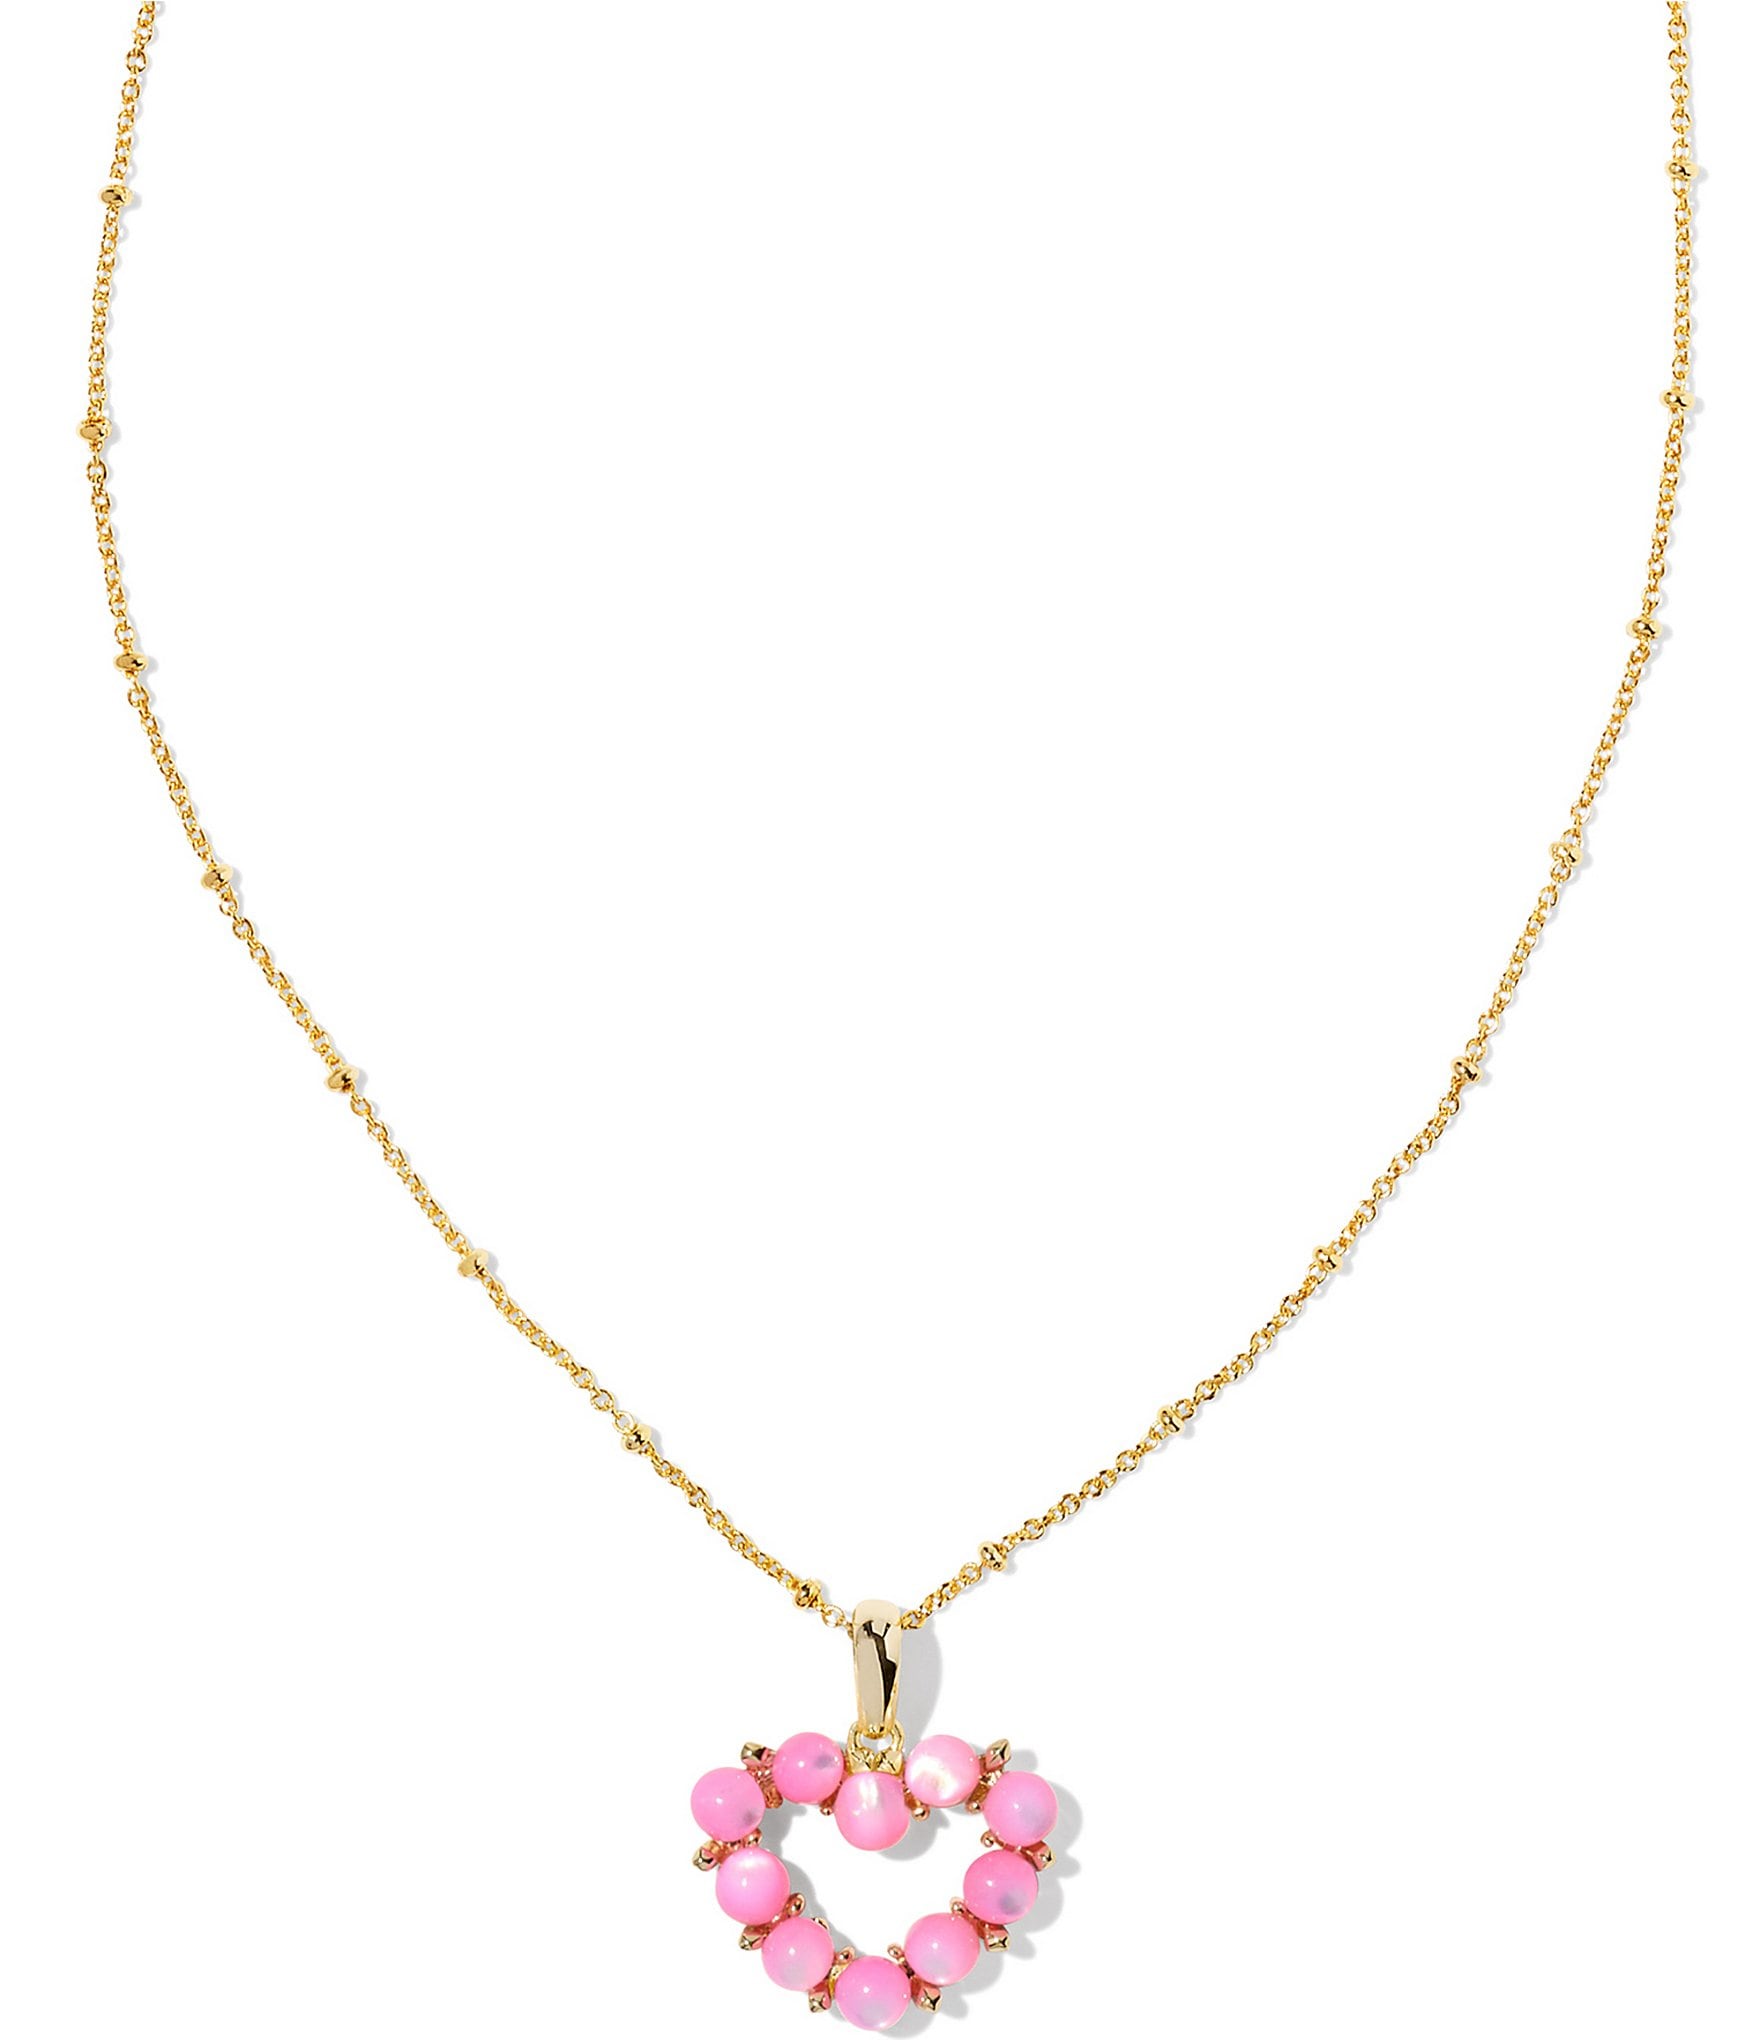 Kendra Scott Ari Heart Pendant Necklace Rhodium-Plated, White  Mother-of-Pearl | eBay